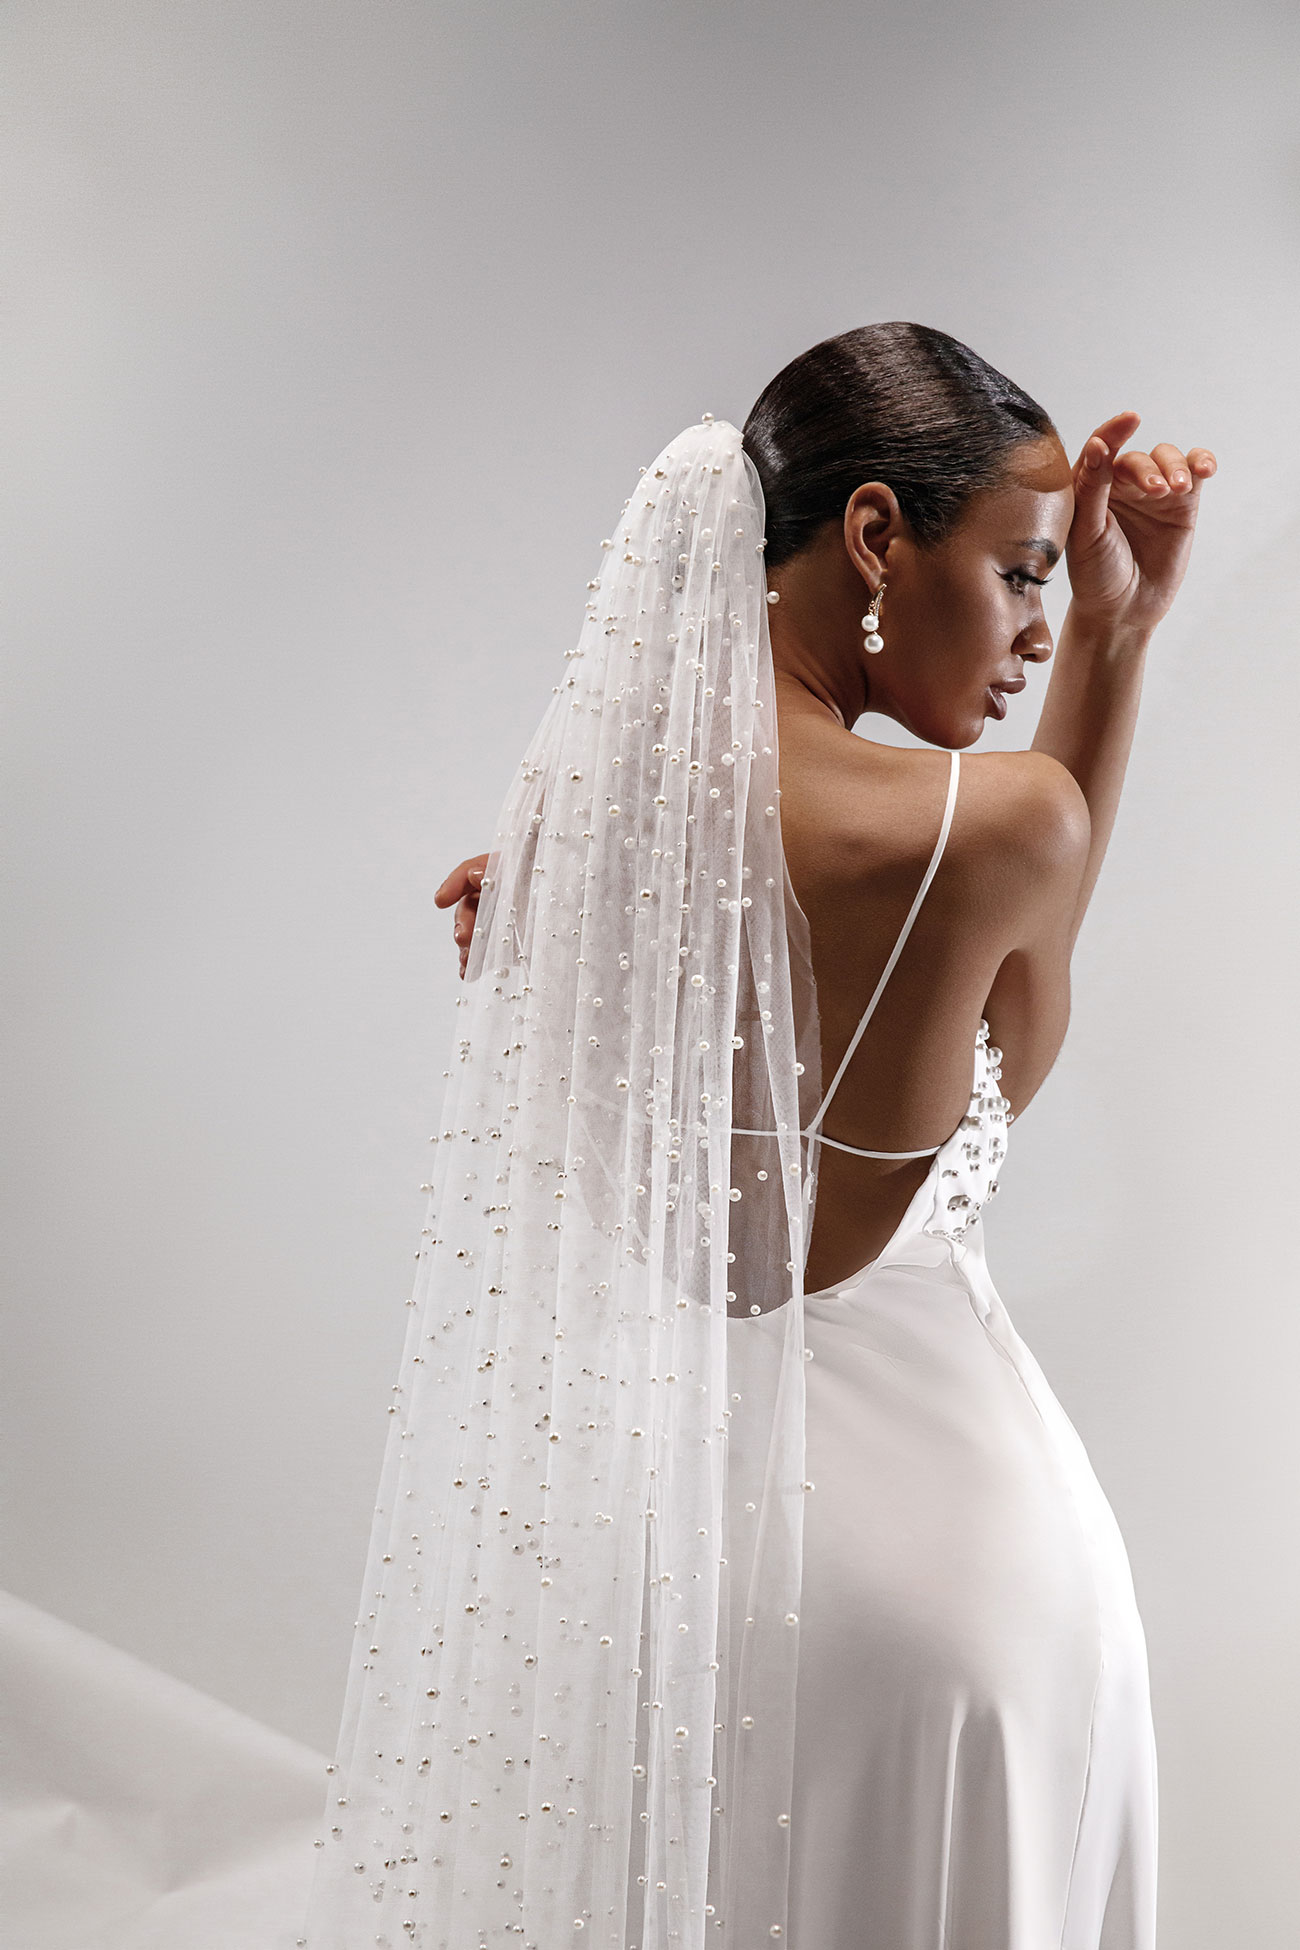 Nola Grey Luxury Bridal Wear Brides Wedding Dresses Veils3